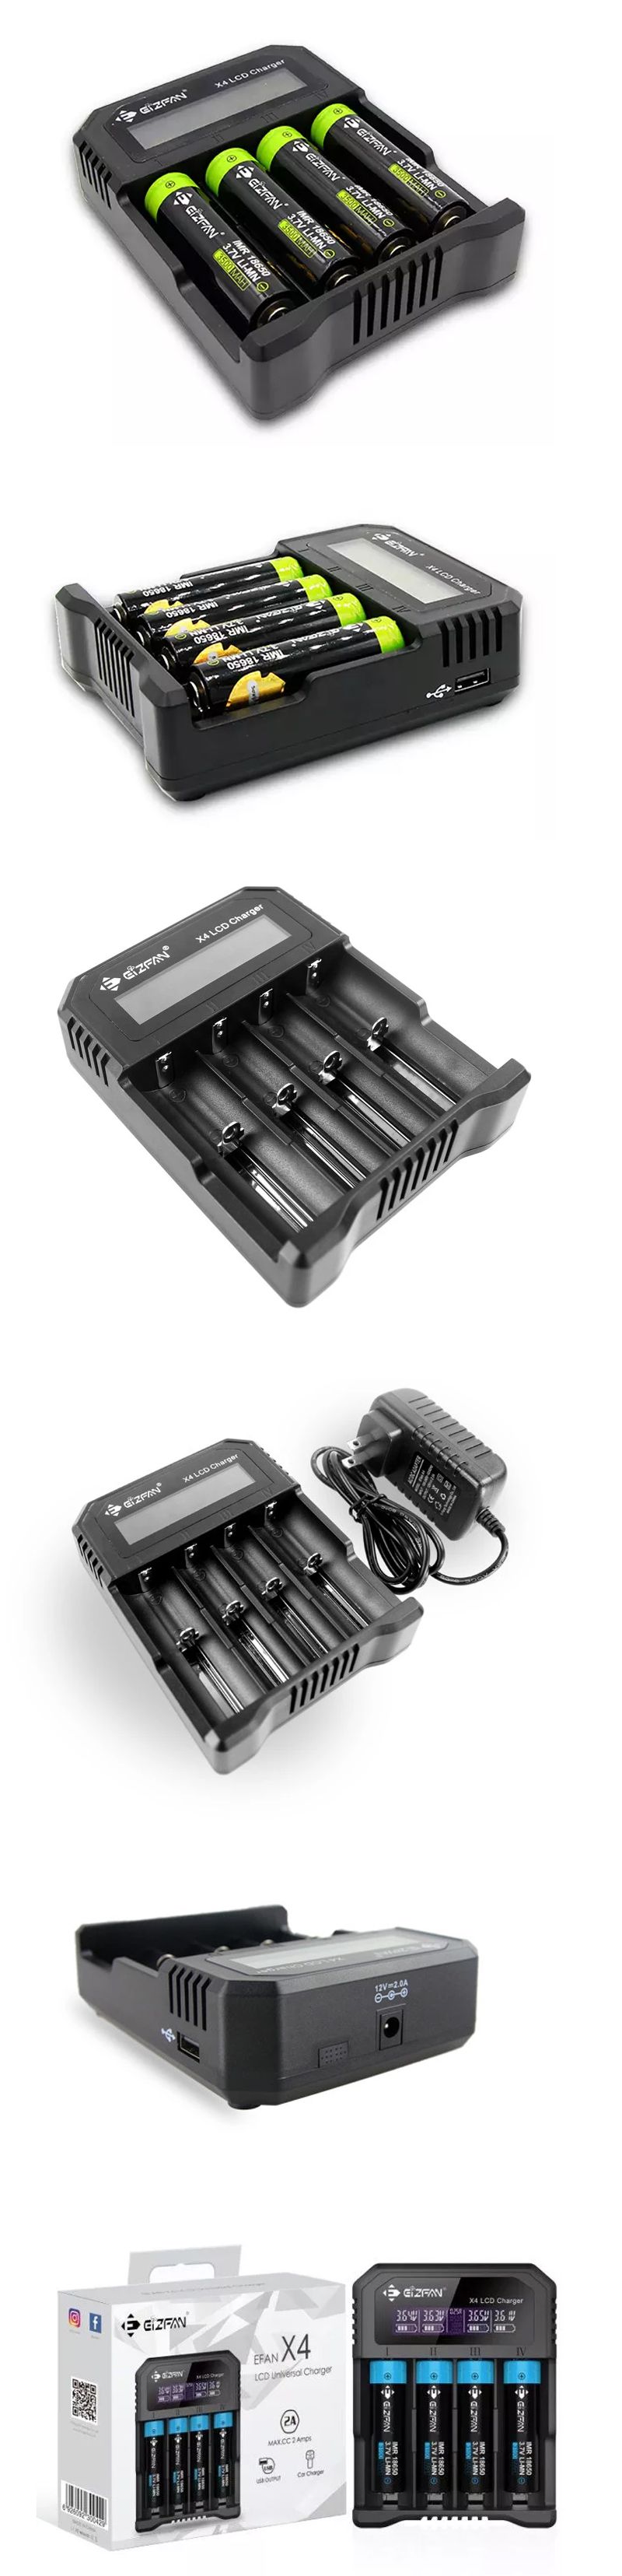 Eizfan-X4-LCD-USB-Universal-Battery-Charger-4-Slots-Small-Li-ion-Charger-For-Li-ionNiMhLifepo4186502-1457439